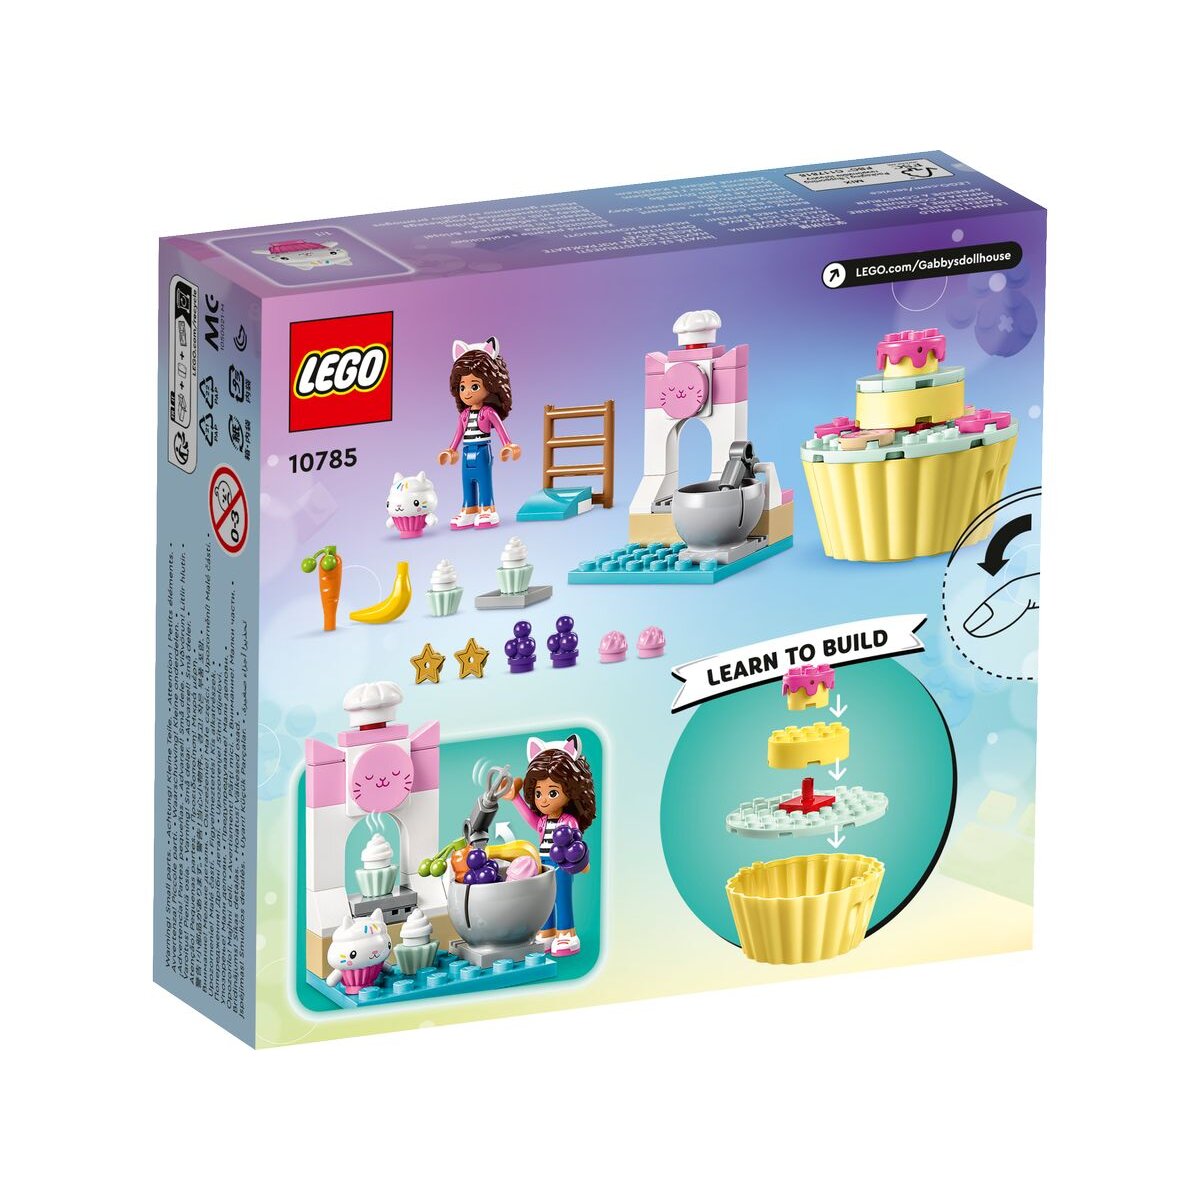 LEGO® Gabby’s Dollhouse 10785 Kuchis Backstube